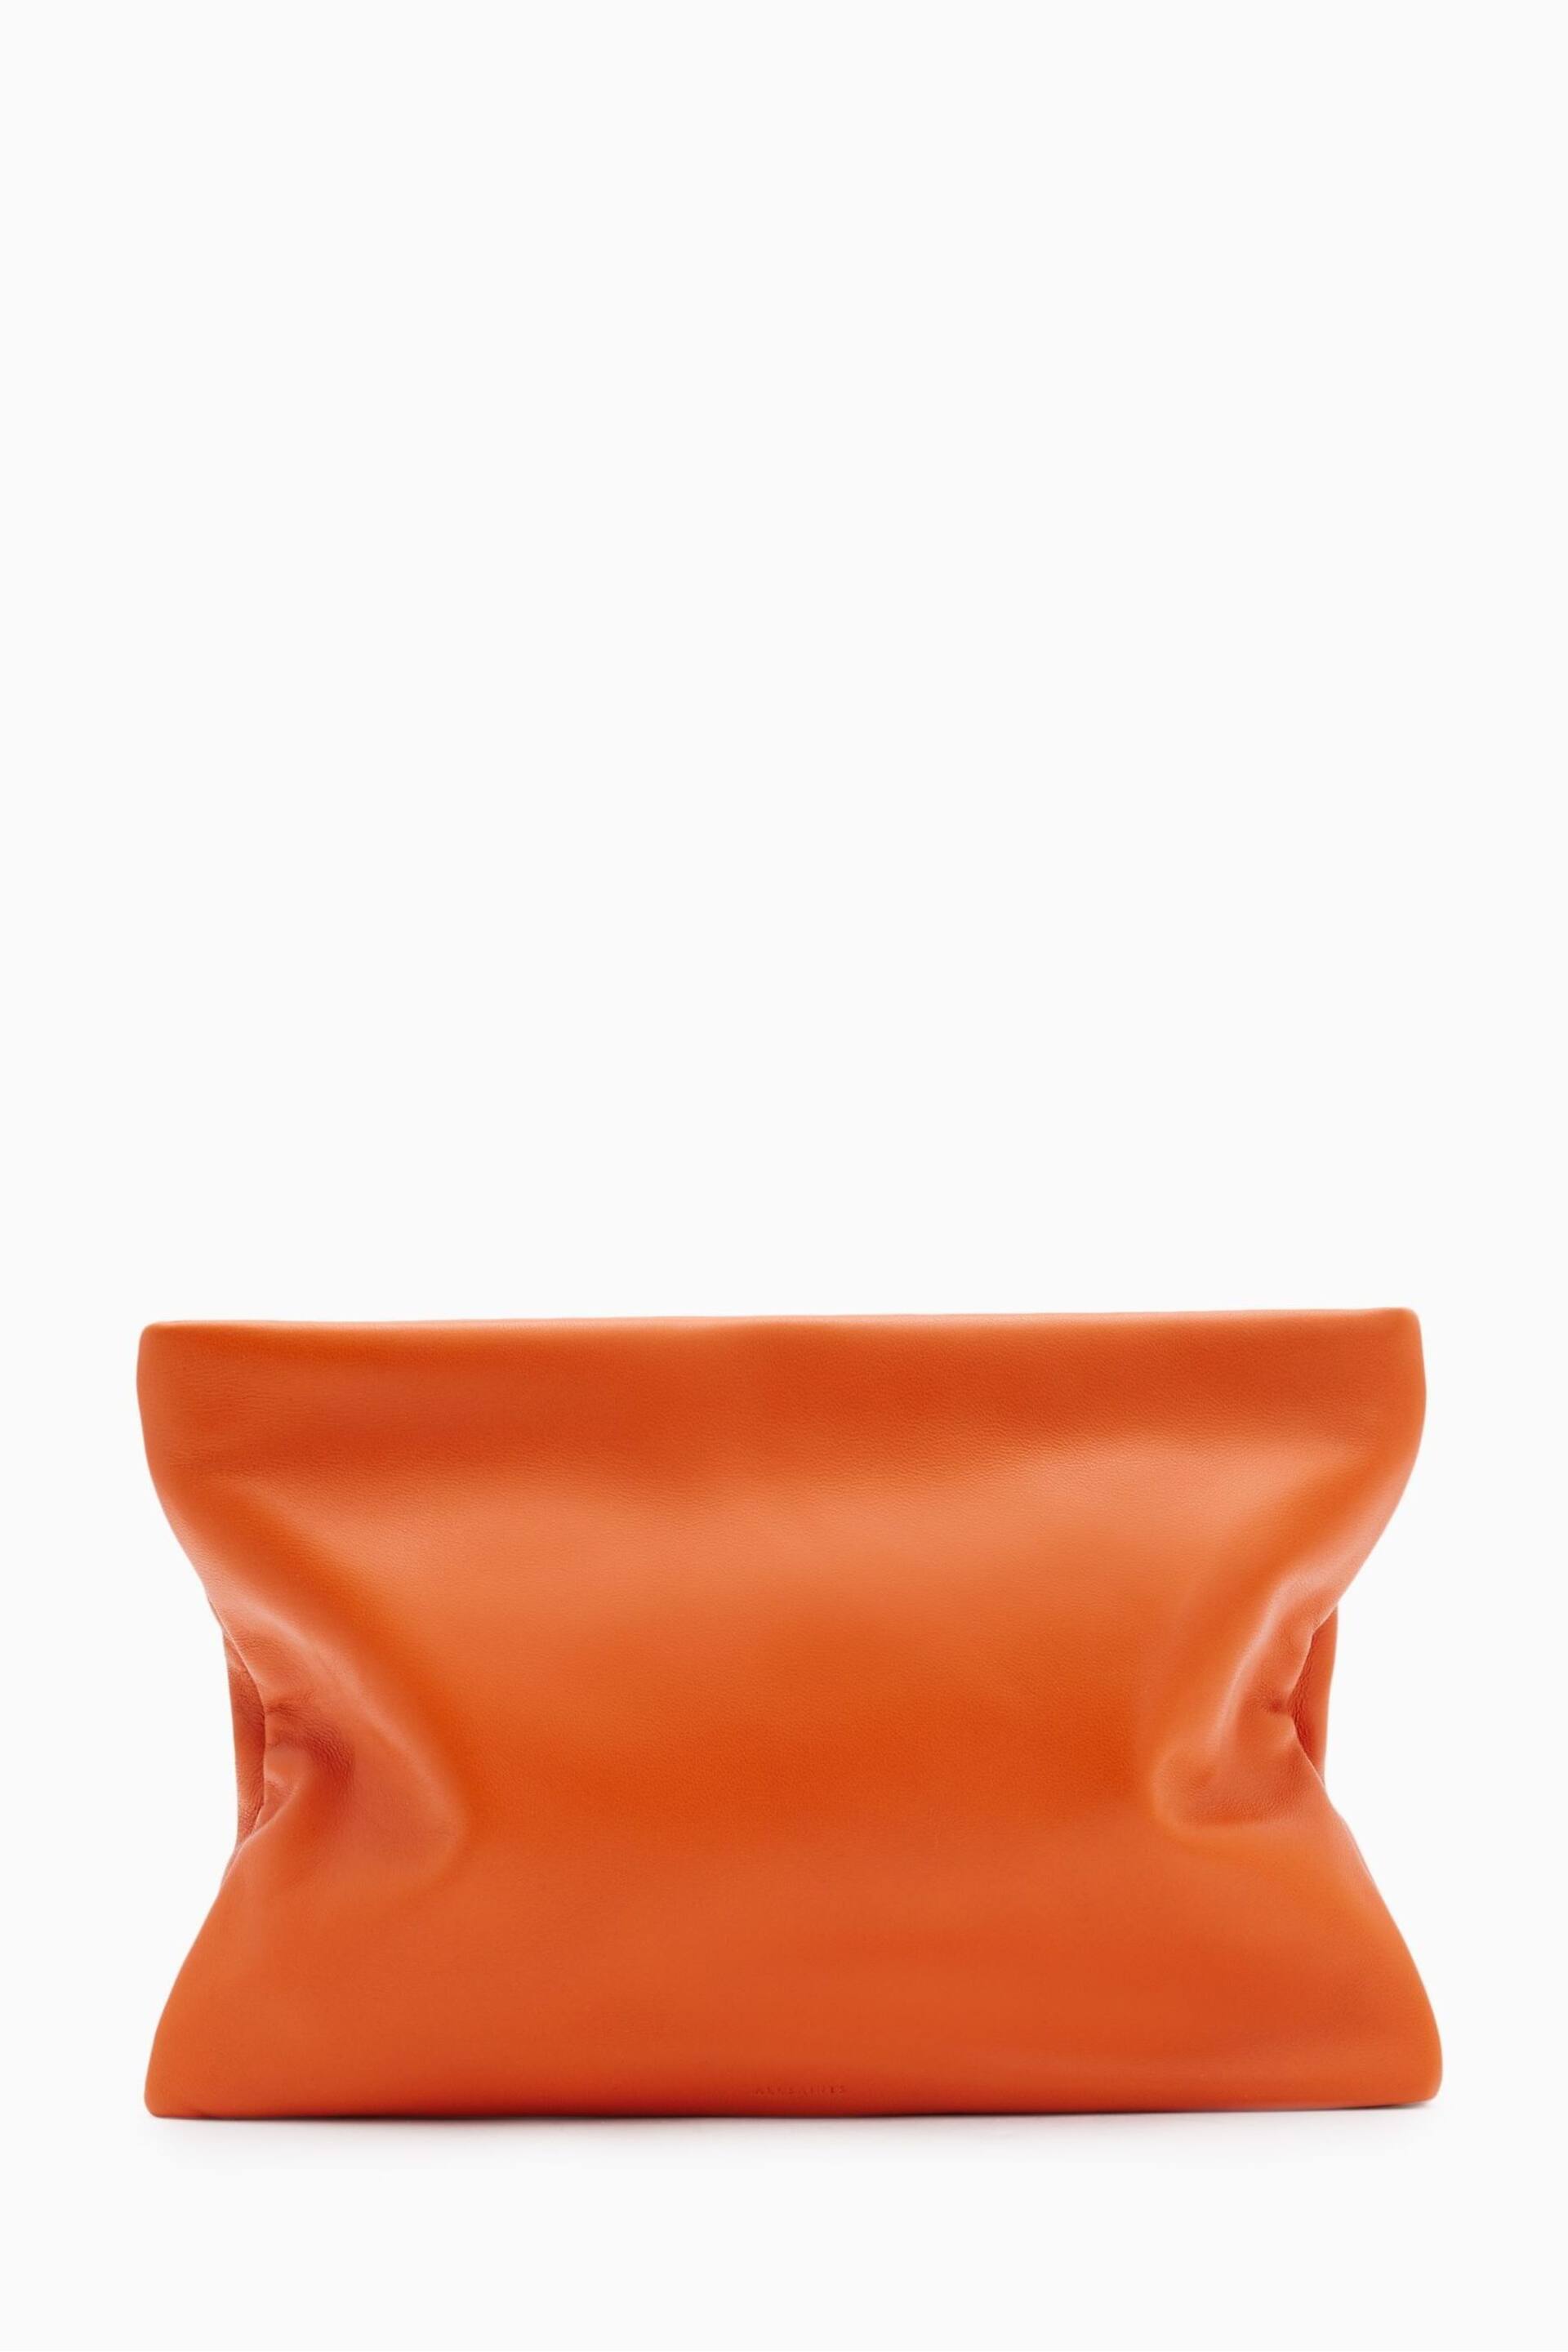 AllSaints Orange Bettina Clutch - Image 2 of 6